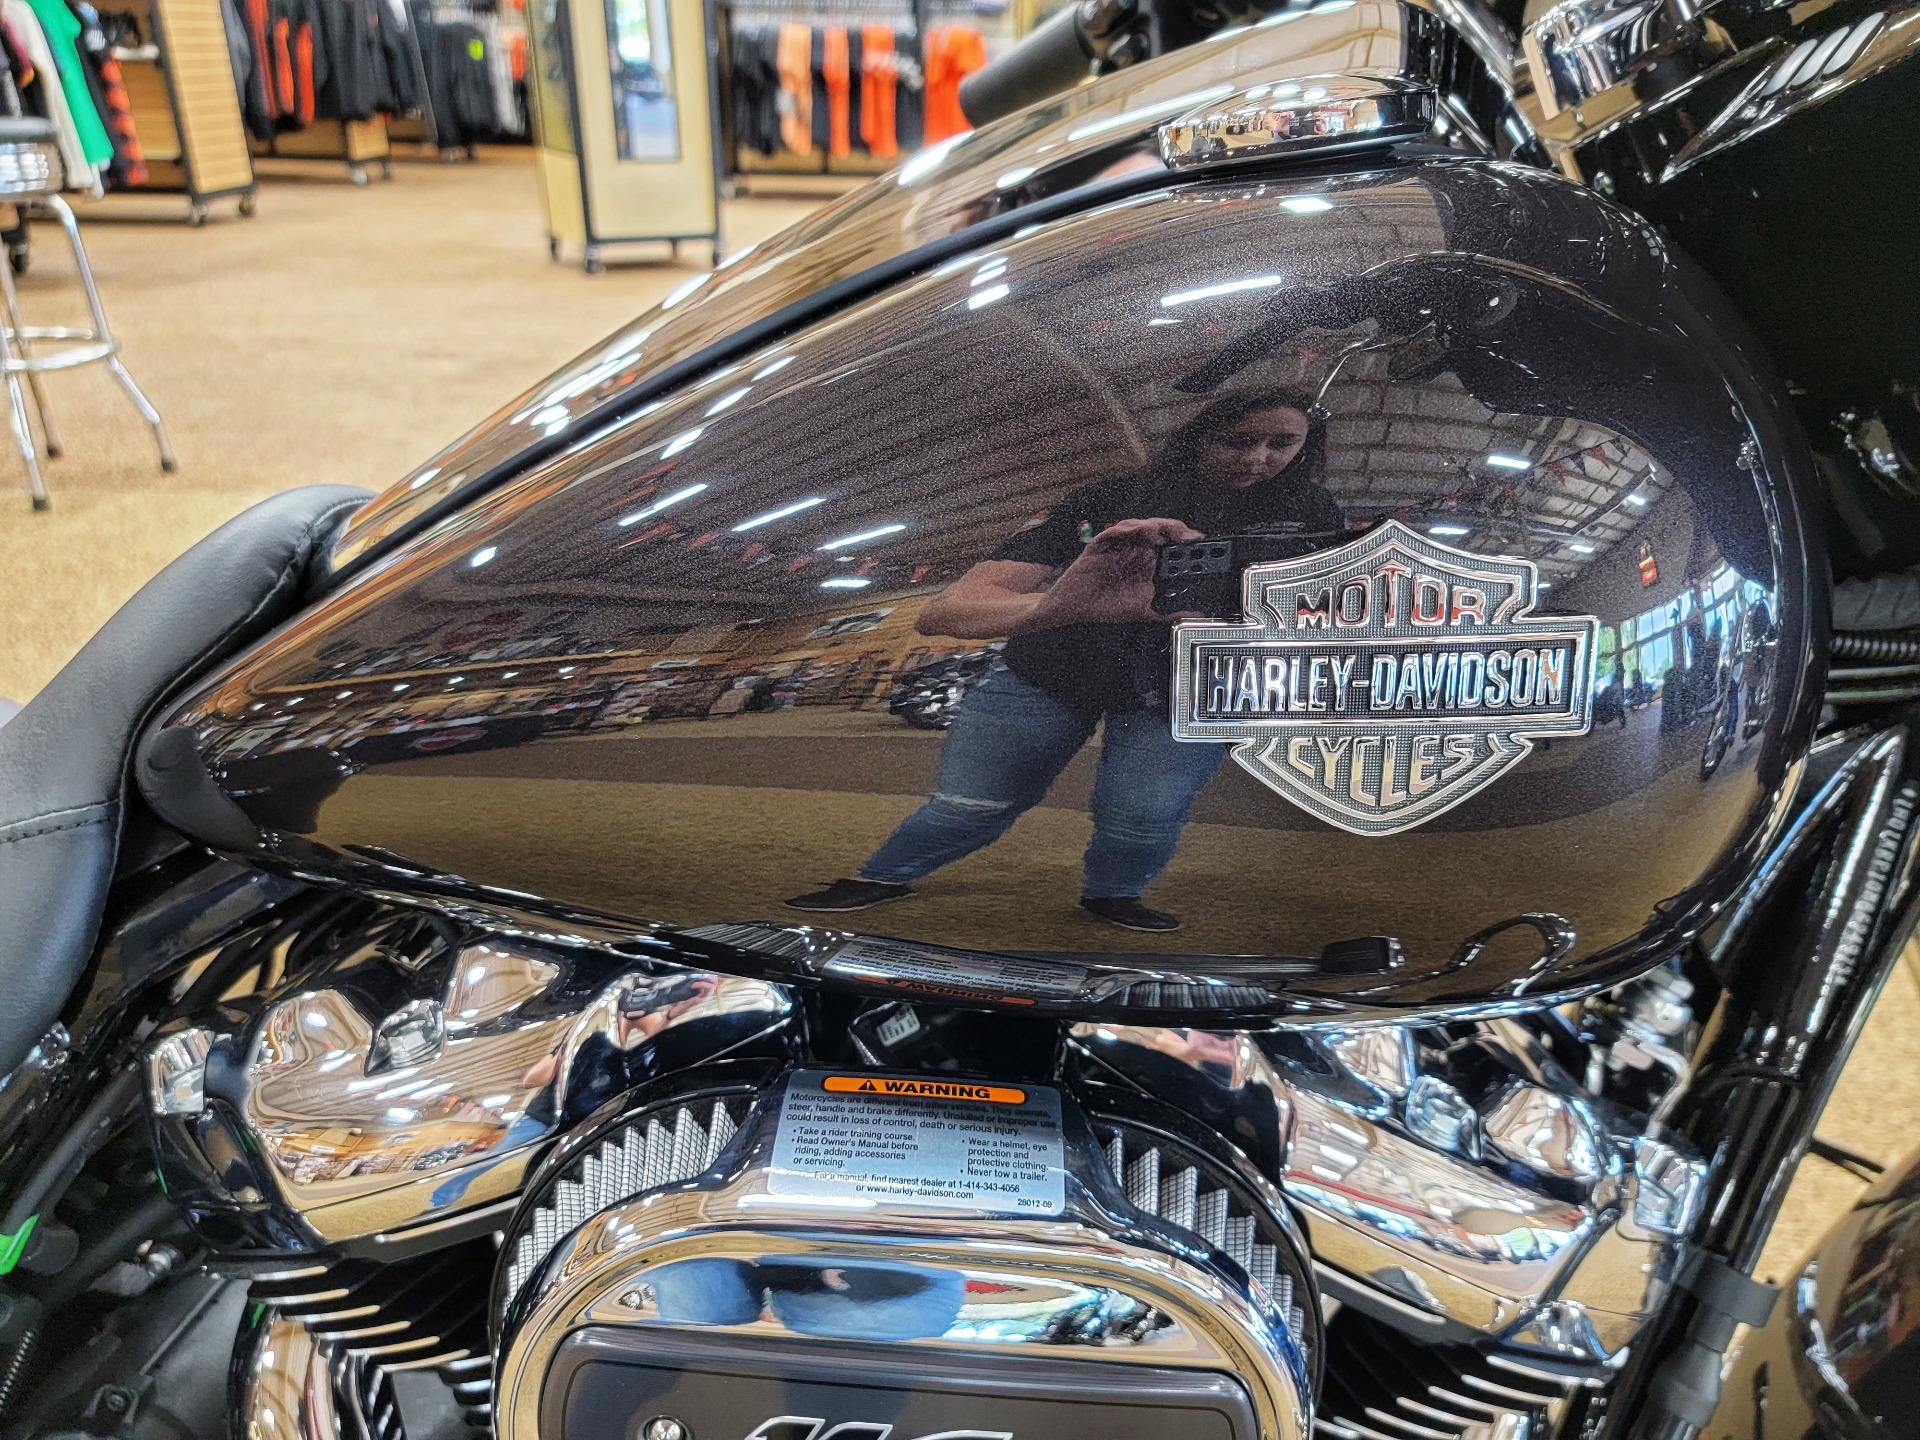 Motorcycle Gear In Owen Sound Motorclothes Fox Harley Davidson